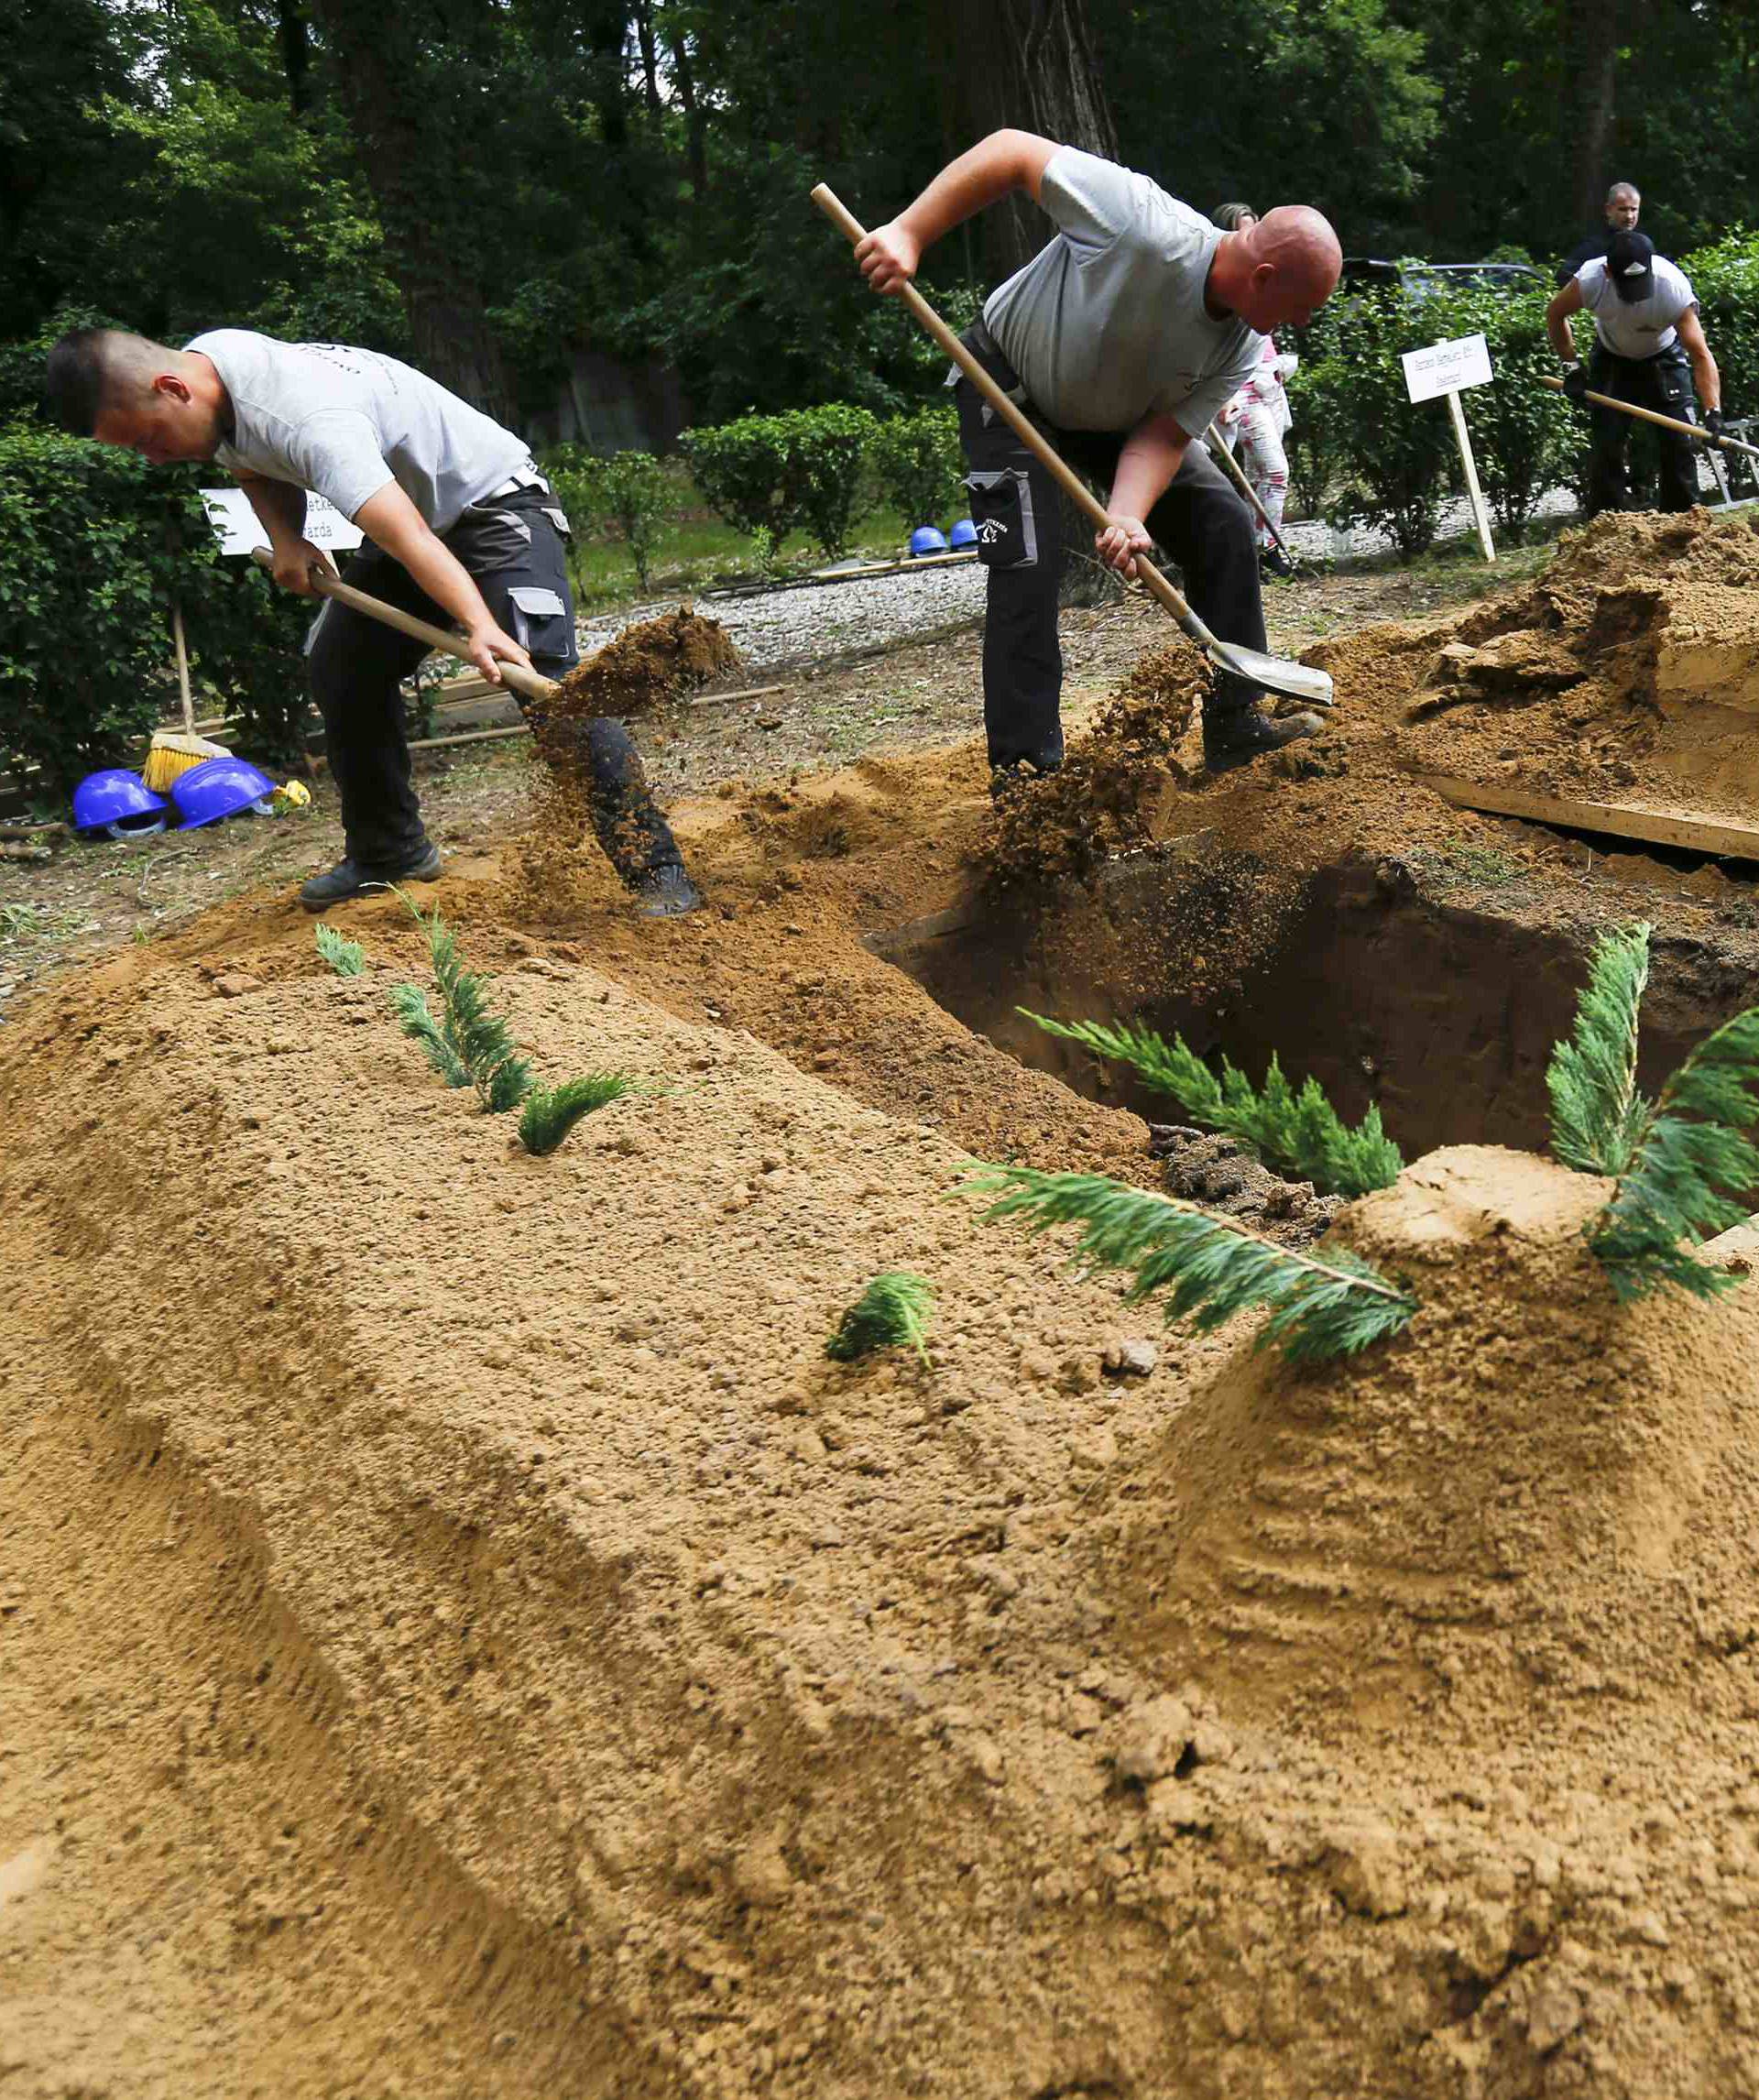 Gravediggers compete in Hungarian grave digging championship in Debrecen